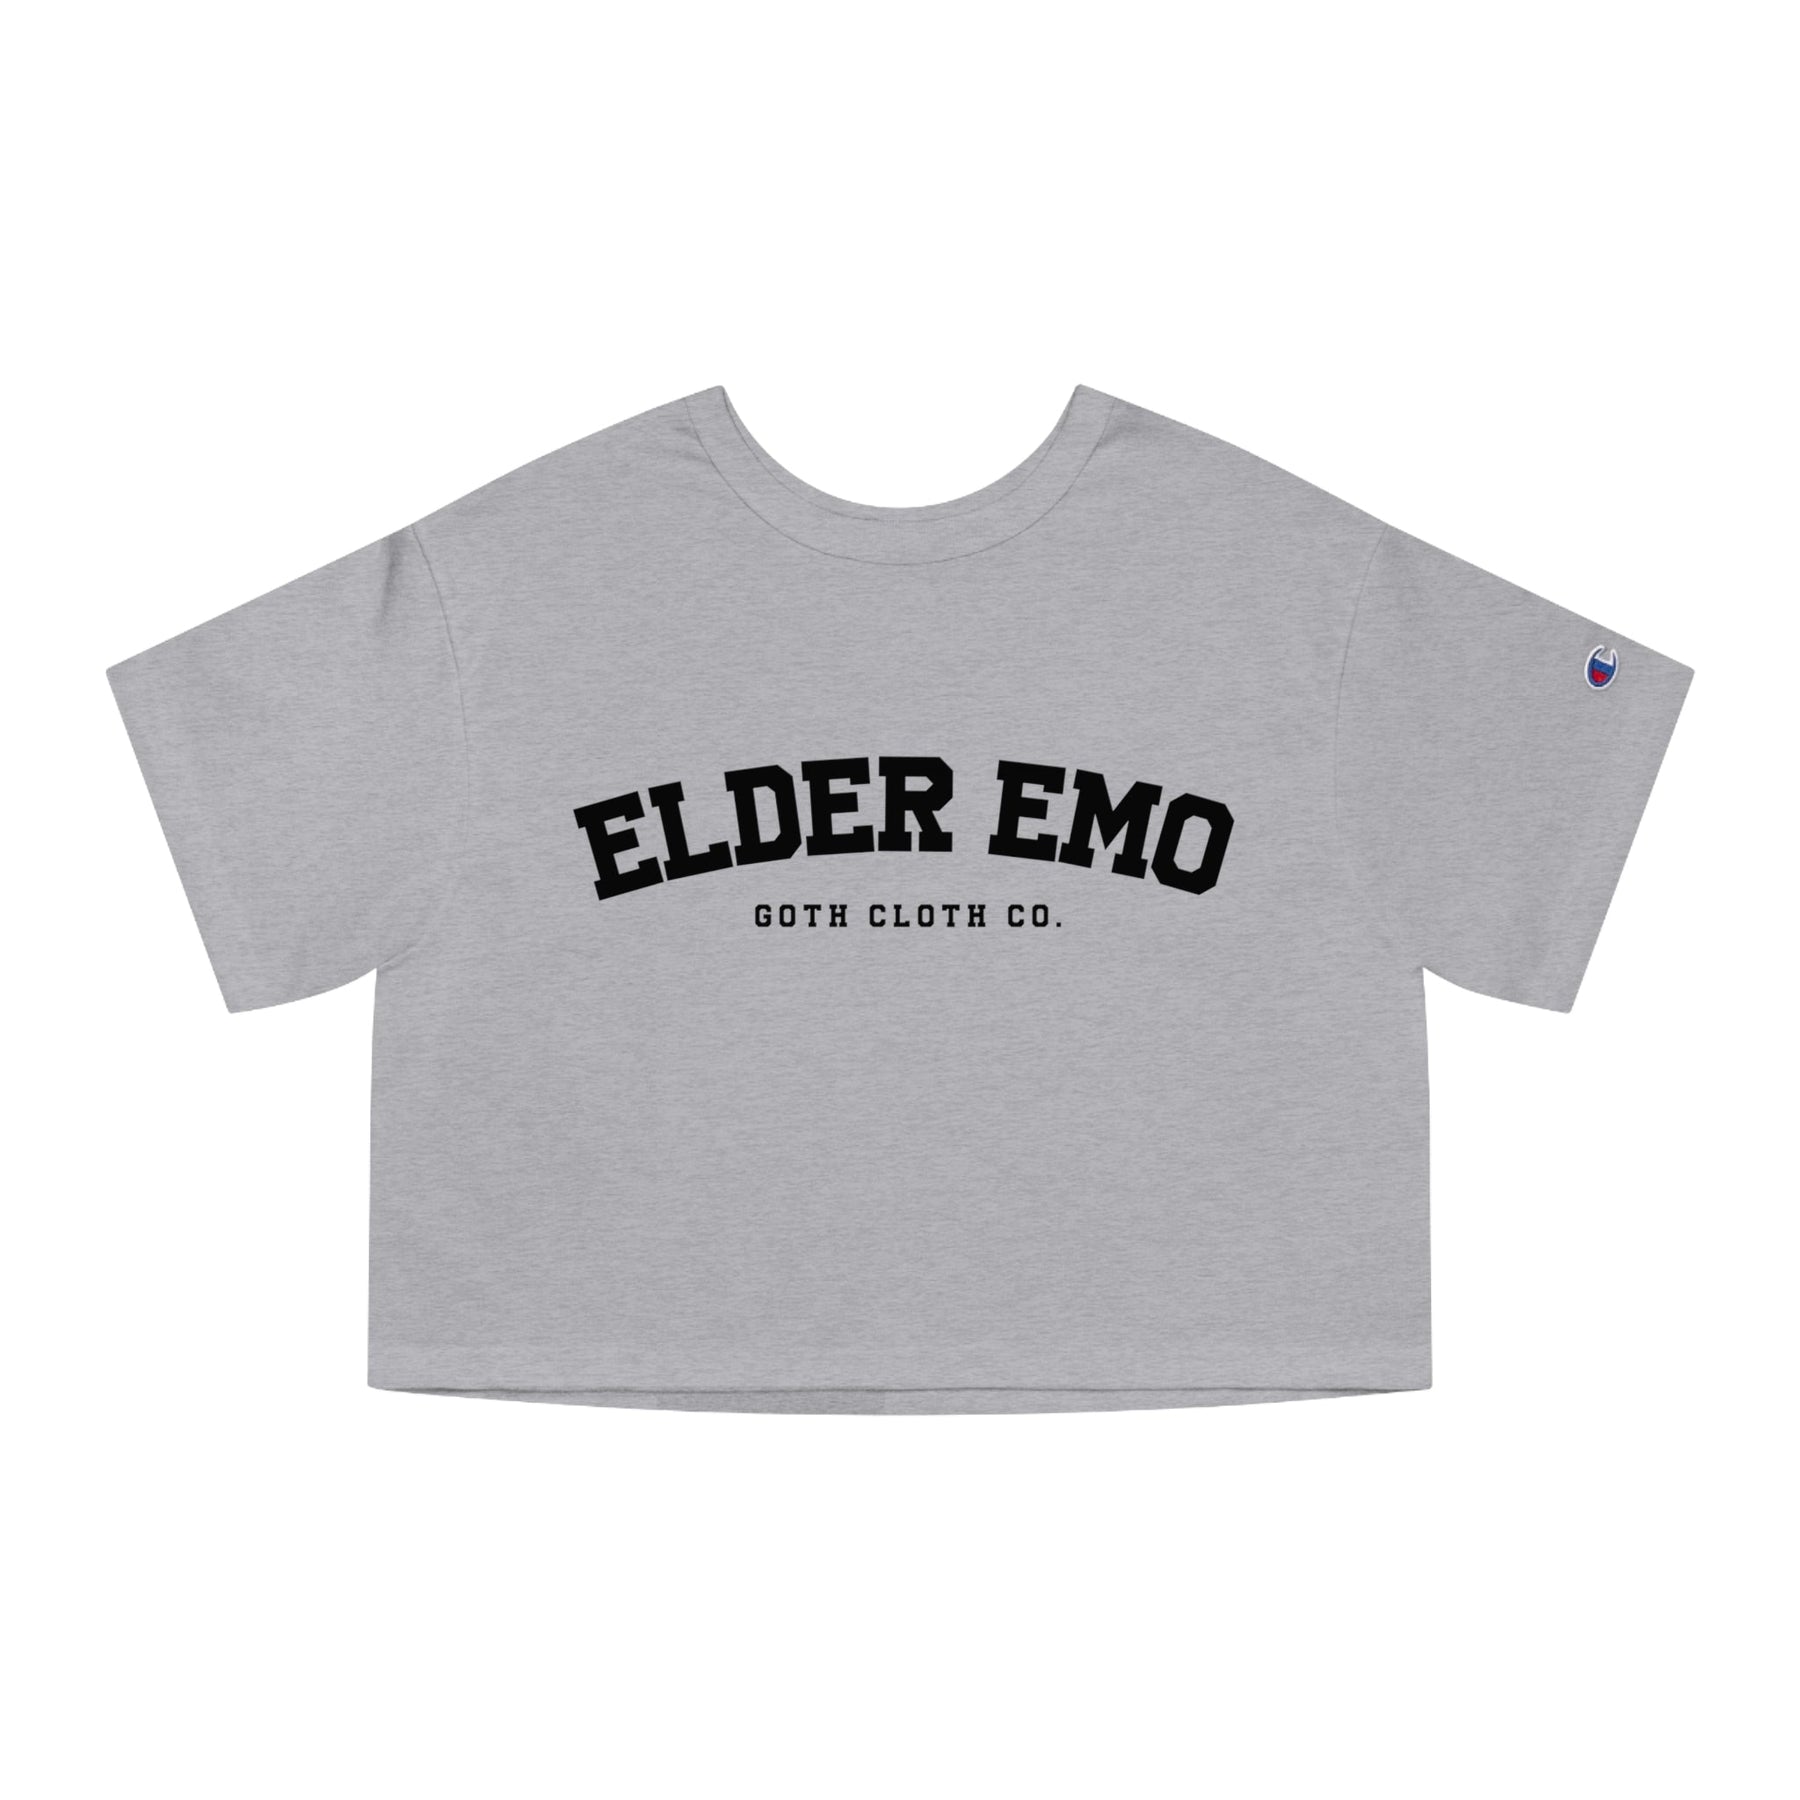 Elder Emo College Heavyweight Cropped T-Shirt - Goth Cloth Co.T-Shirt31466250027622285594